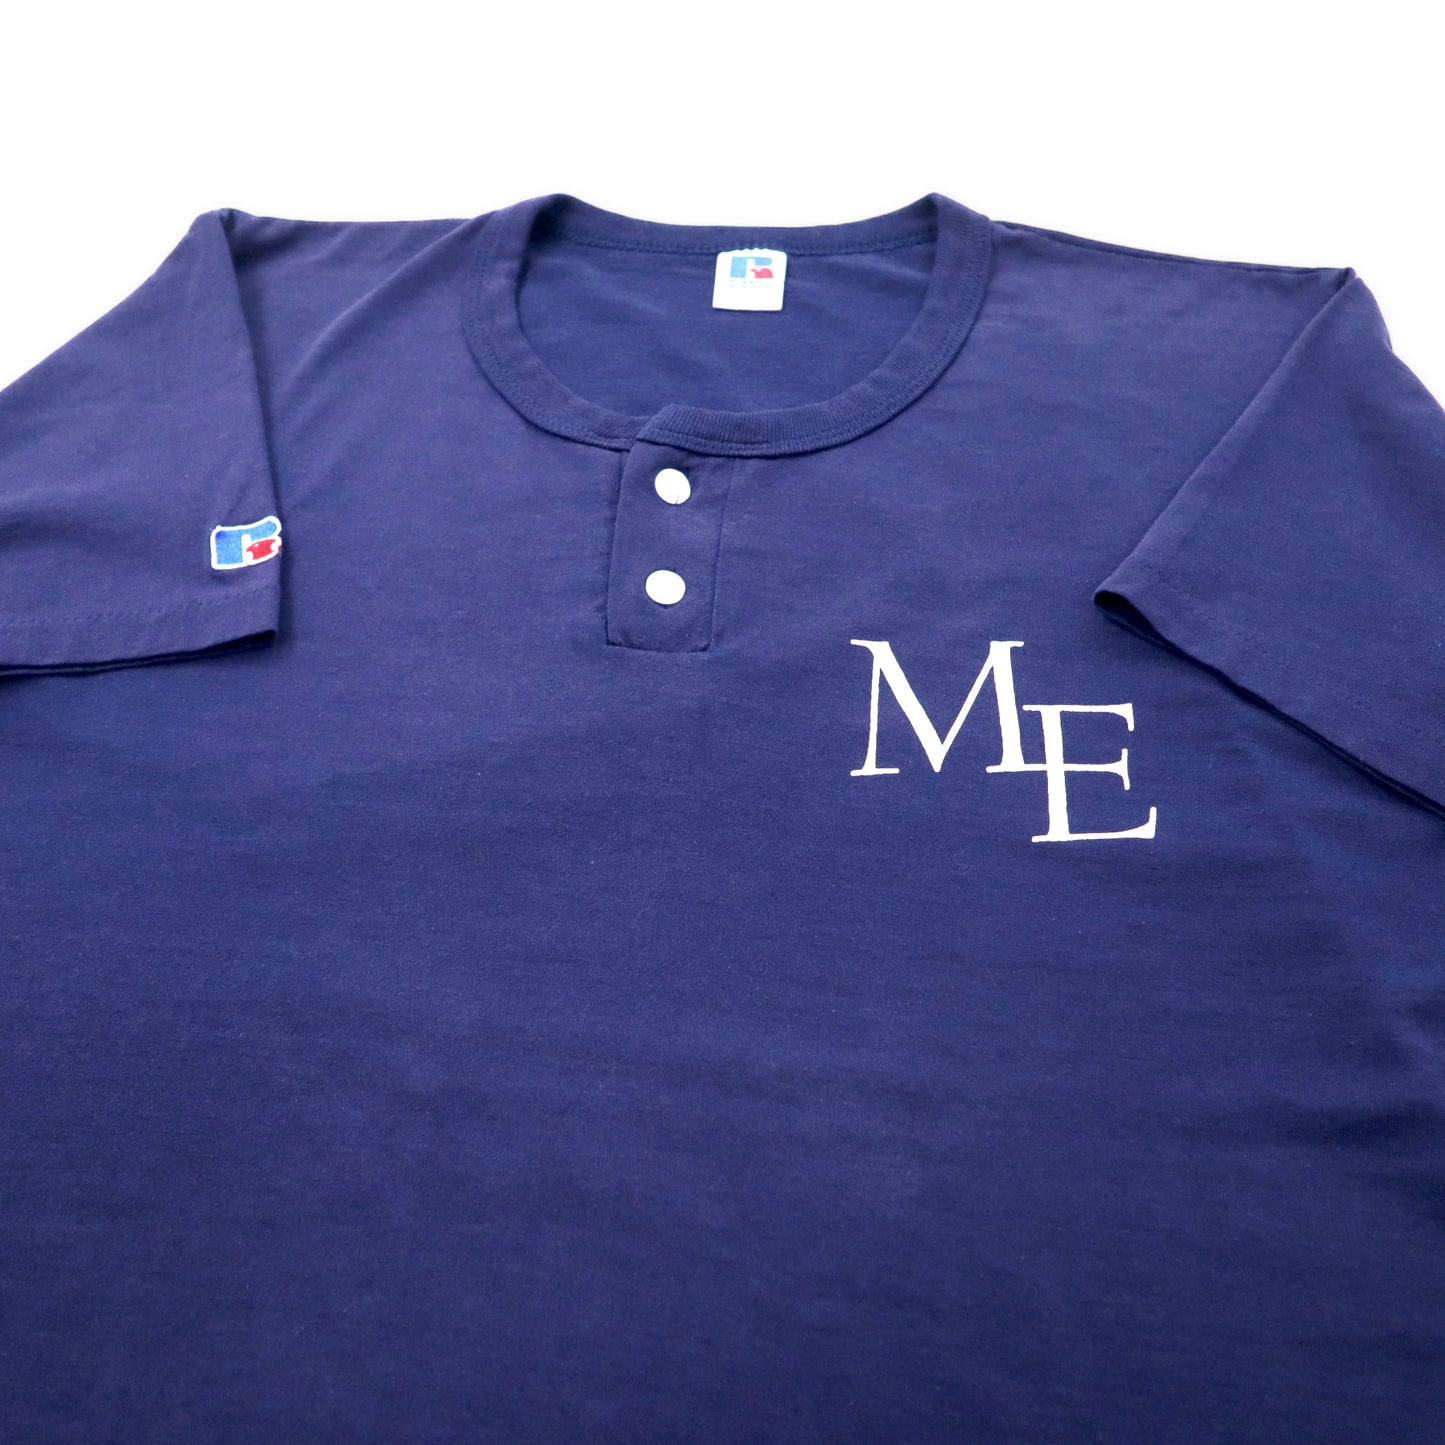 USA製 RUSSELL ATHLETIC 80年代 ヘンリーネック Tシャツ XL ネイビー コットン バックプリント McCANN-ERICKSON MEN'S SOFTBALL